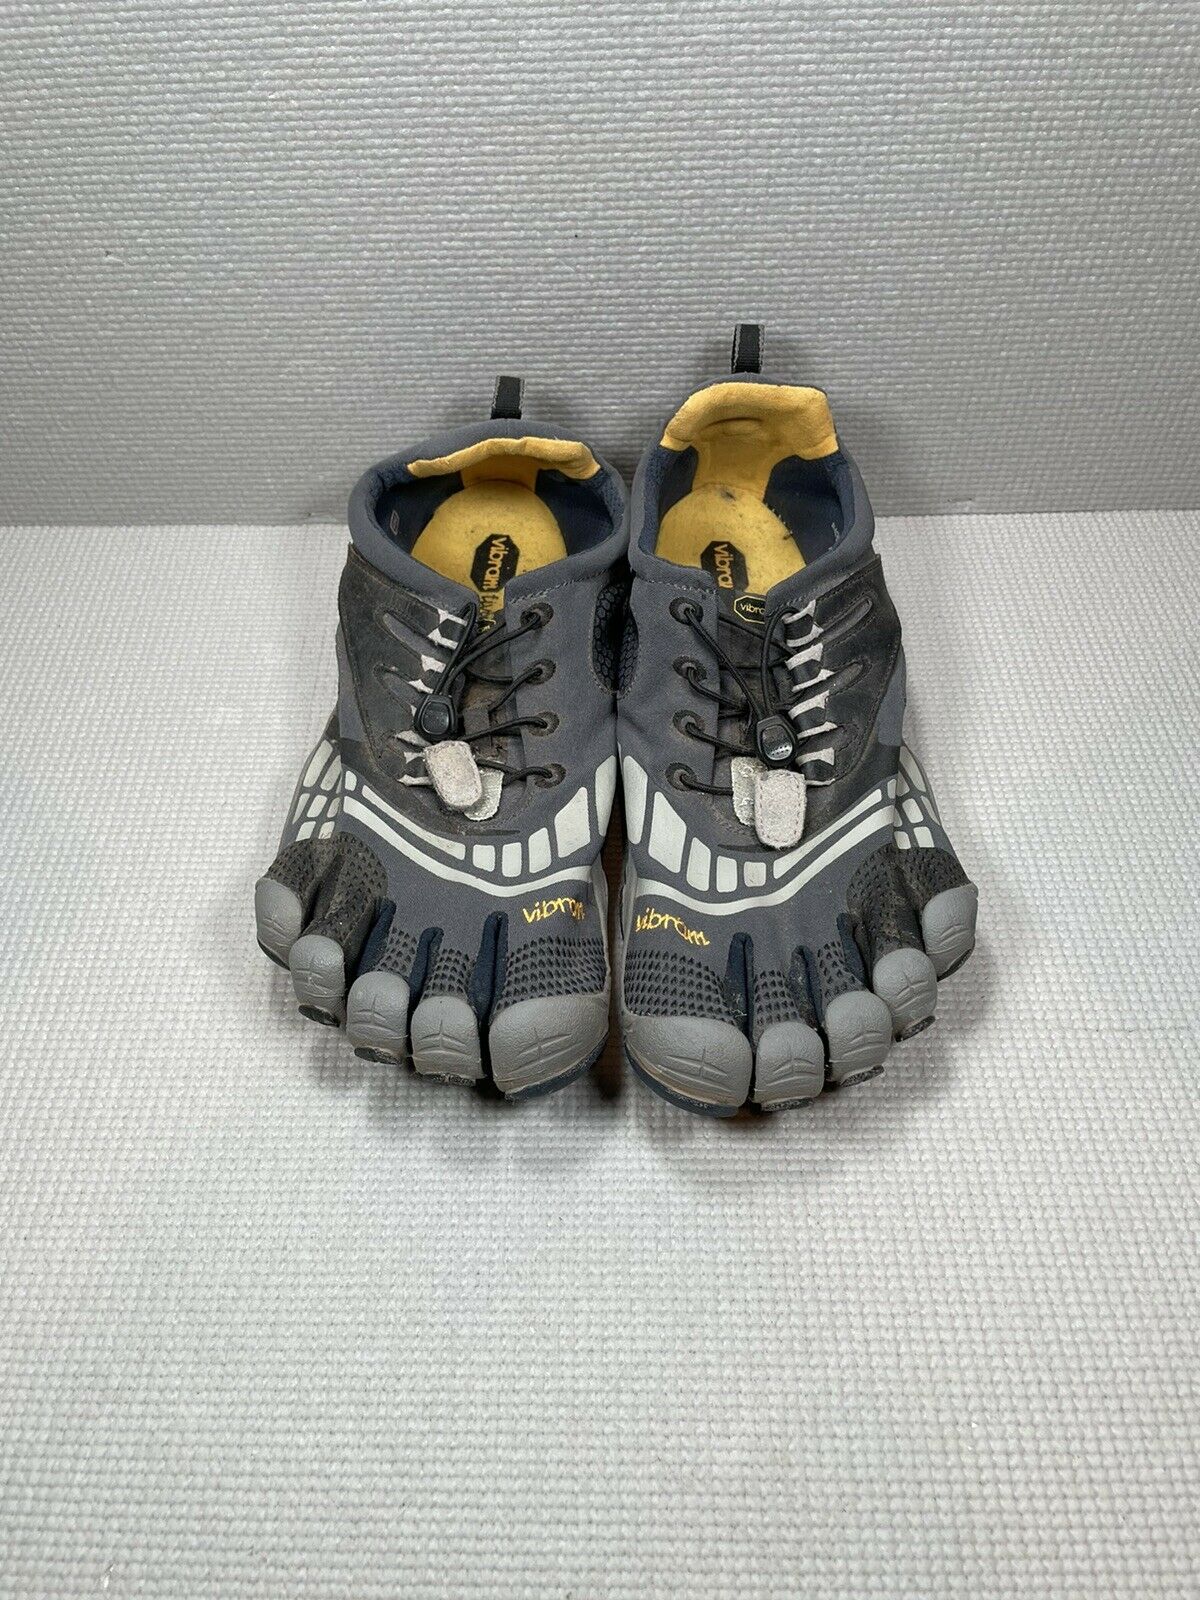 Vibram Five Fingers Sports Water Shoes Men’s Black/Gray/Yellow Size EU 46 US 12